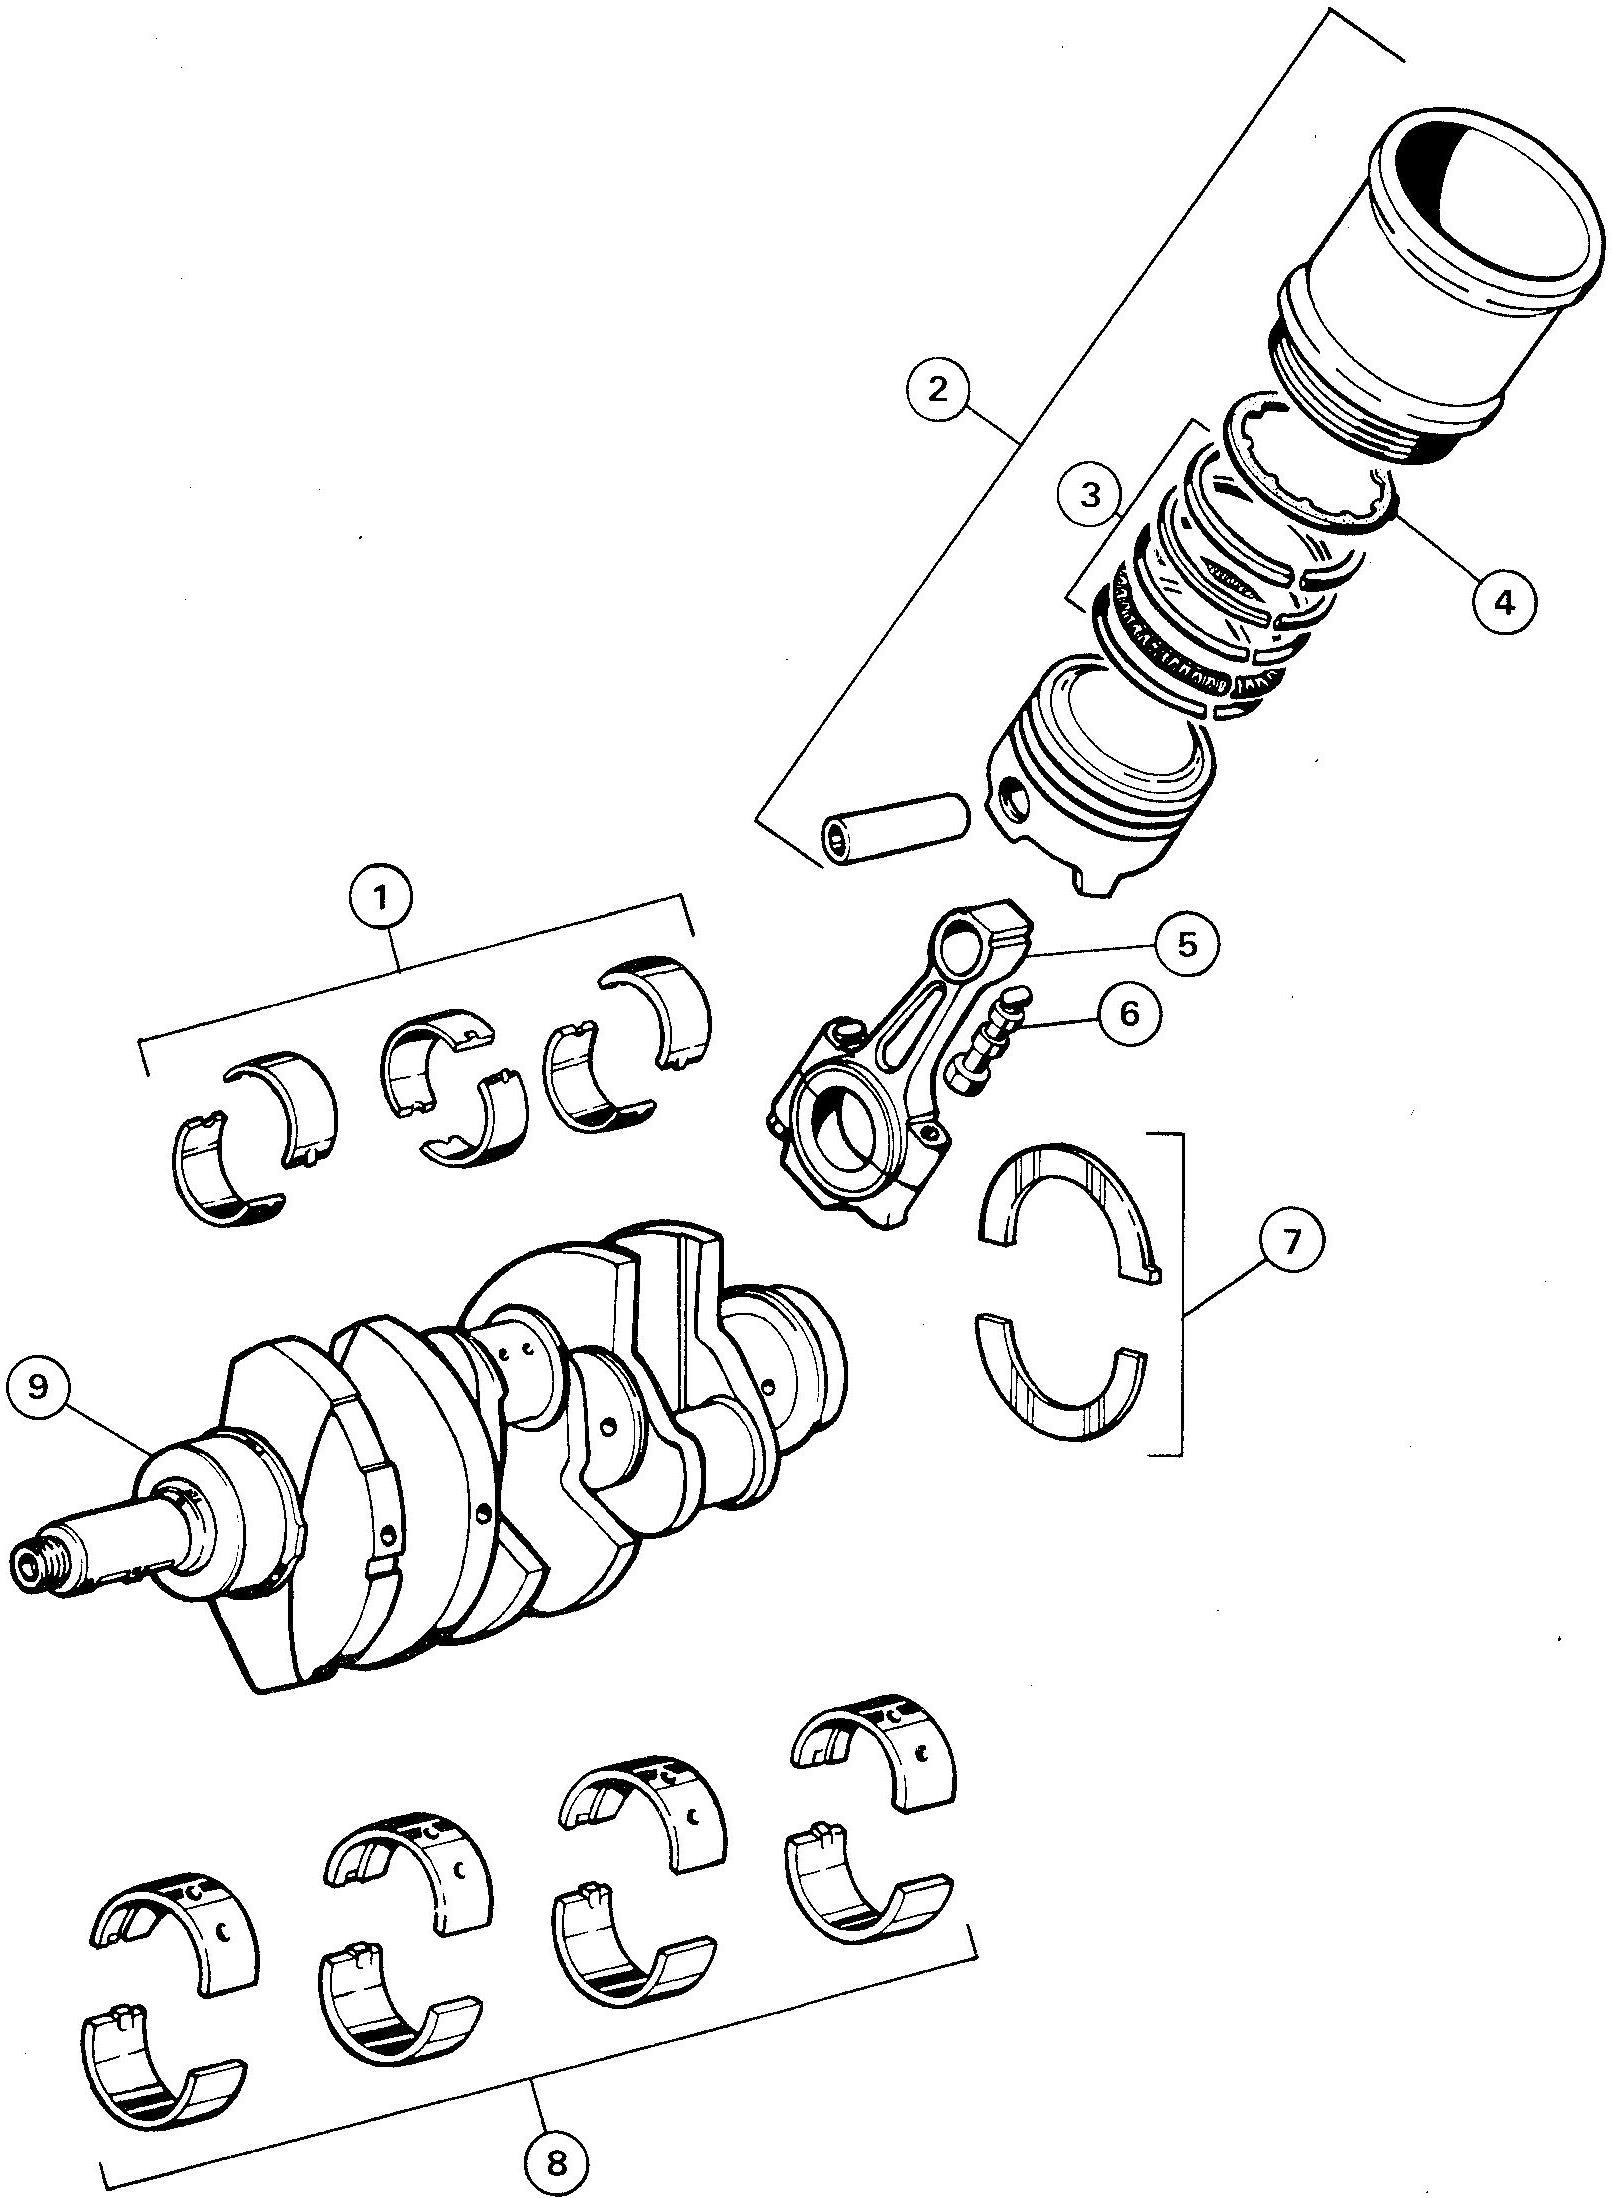 1-1-2 Crankshaft/Piston Assembly